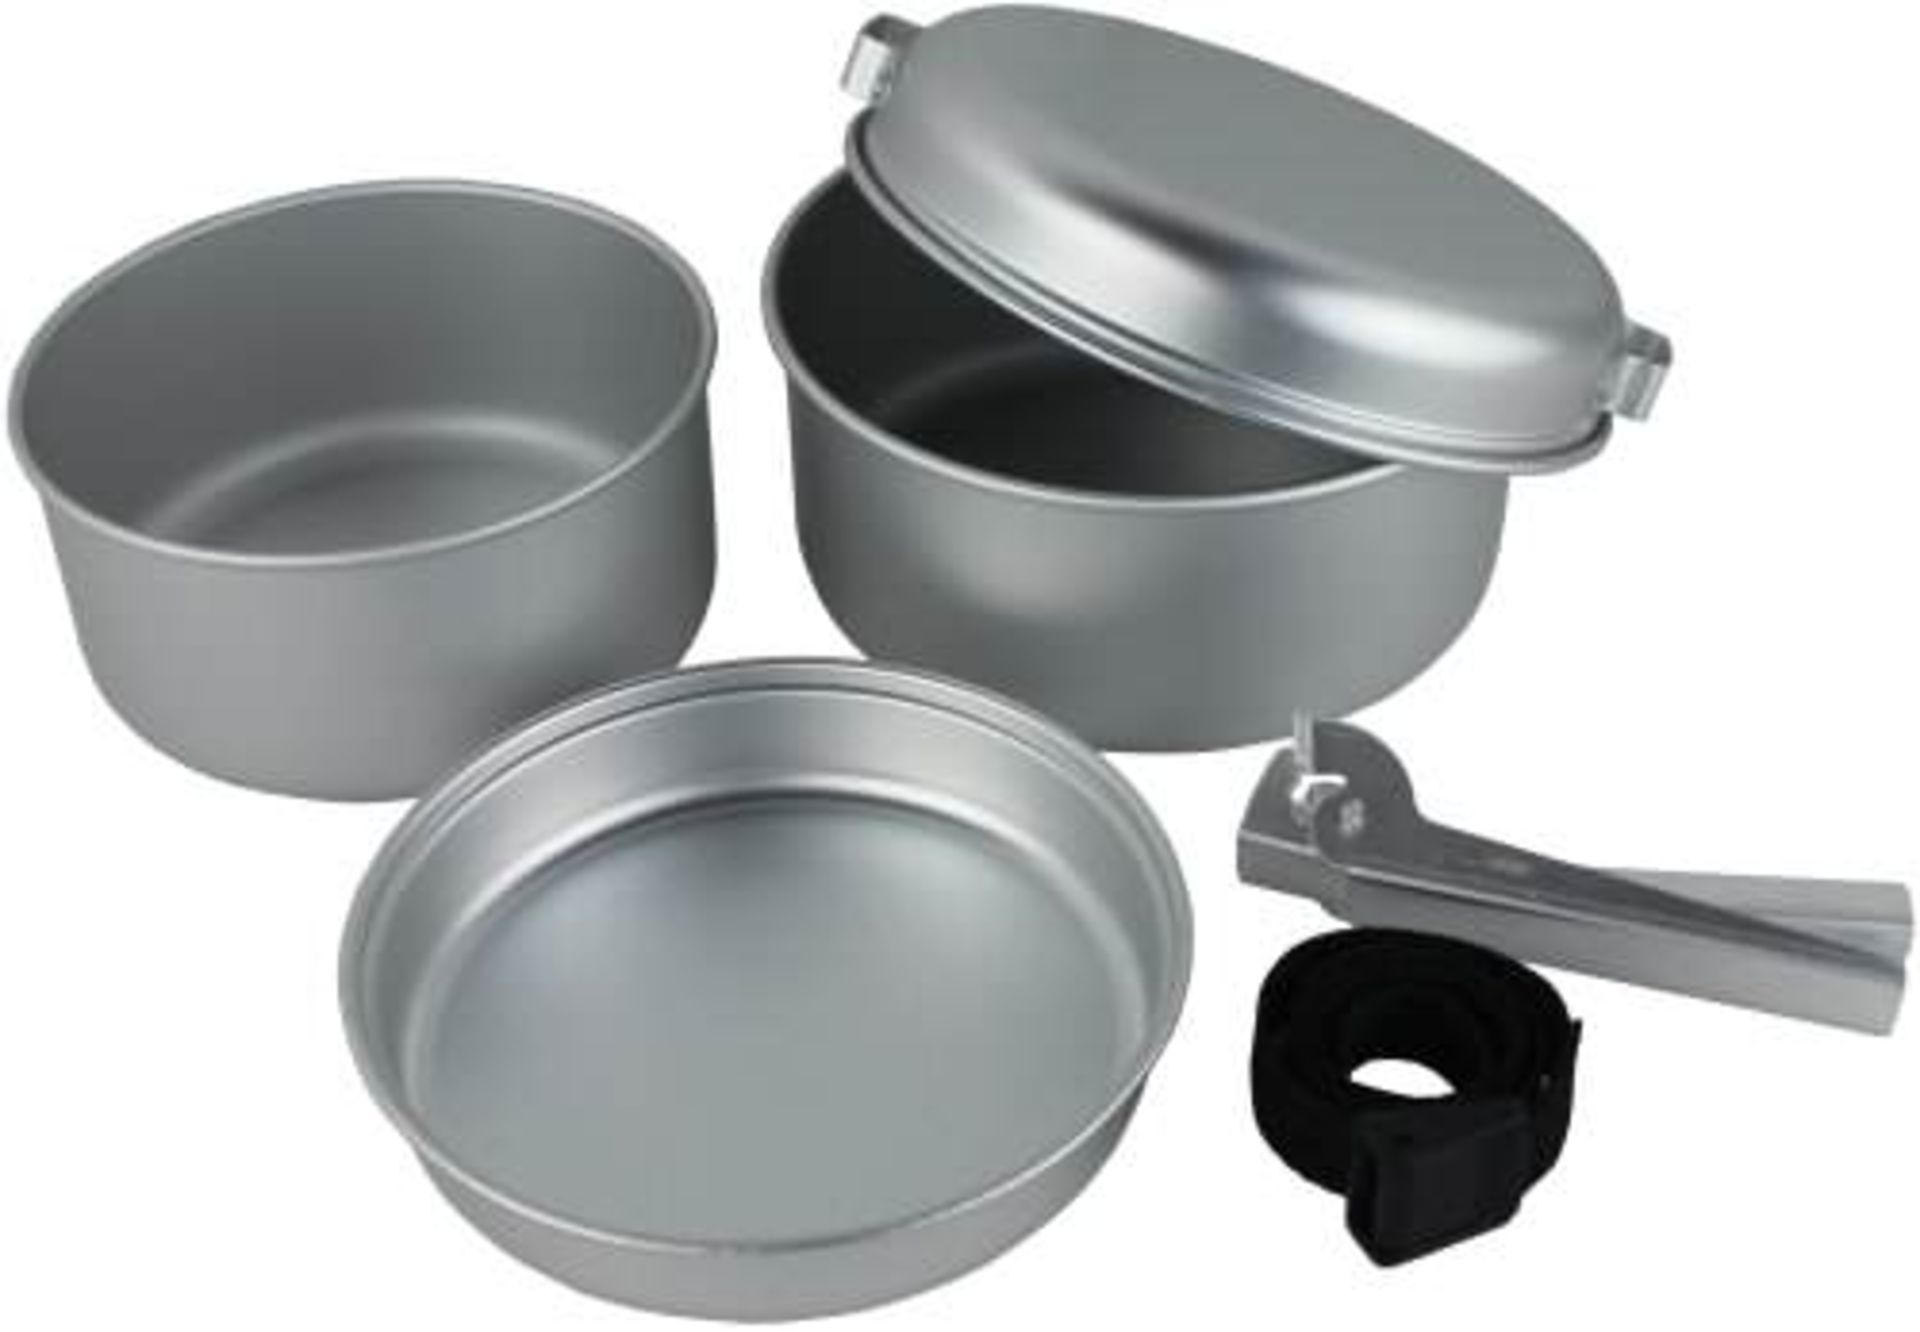 V Brand New 5Pce Aluminium Cook Set Inc 2 Saucepans 1 Frying Pan Etc X 2 YOUR BID PRICE TO BE